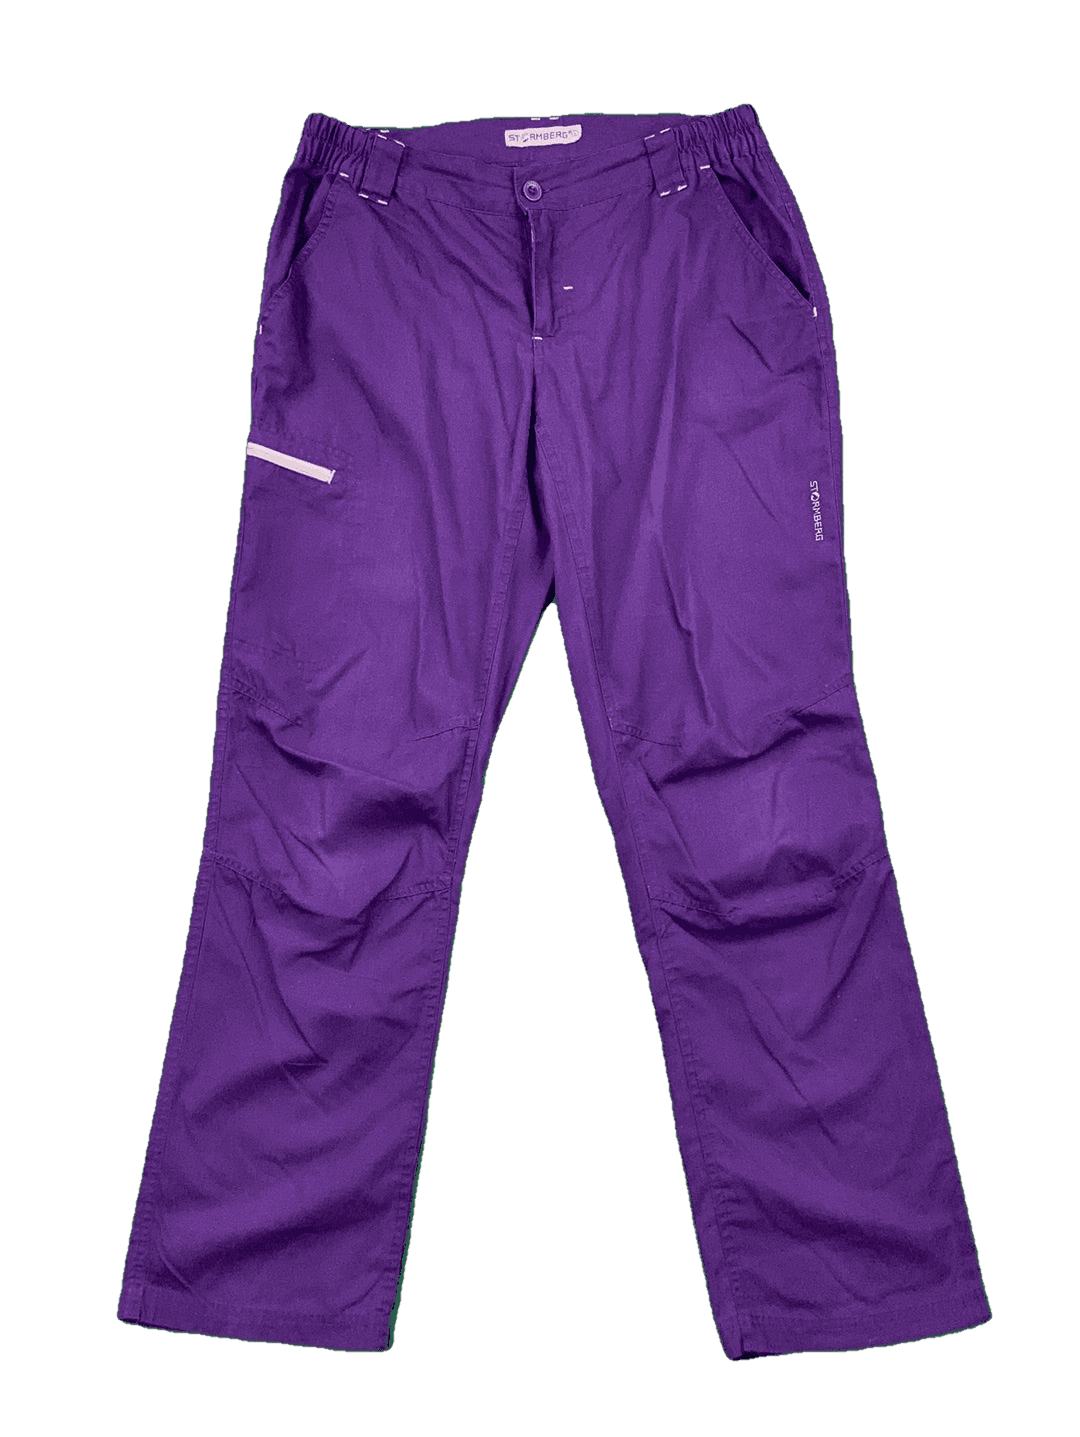 Stromberg Outdoor Pants 34/32 (L)